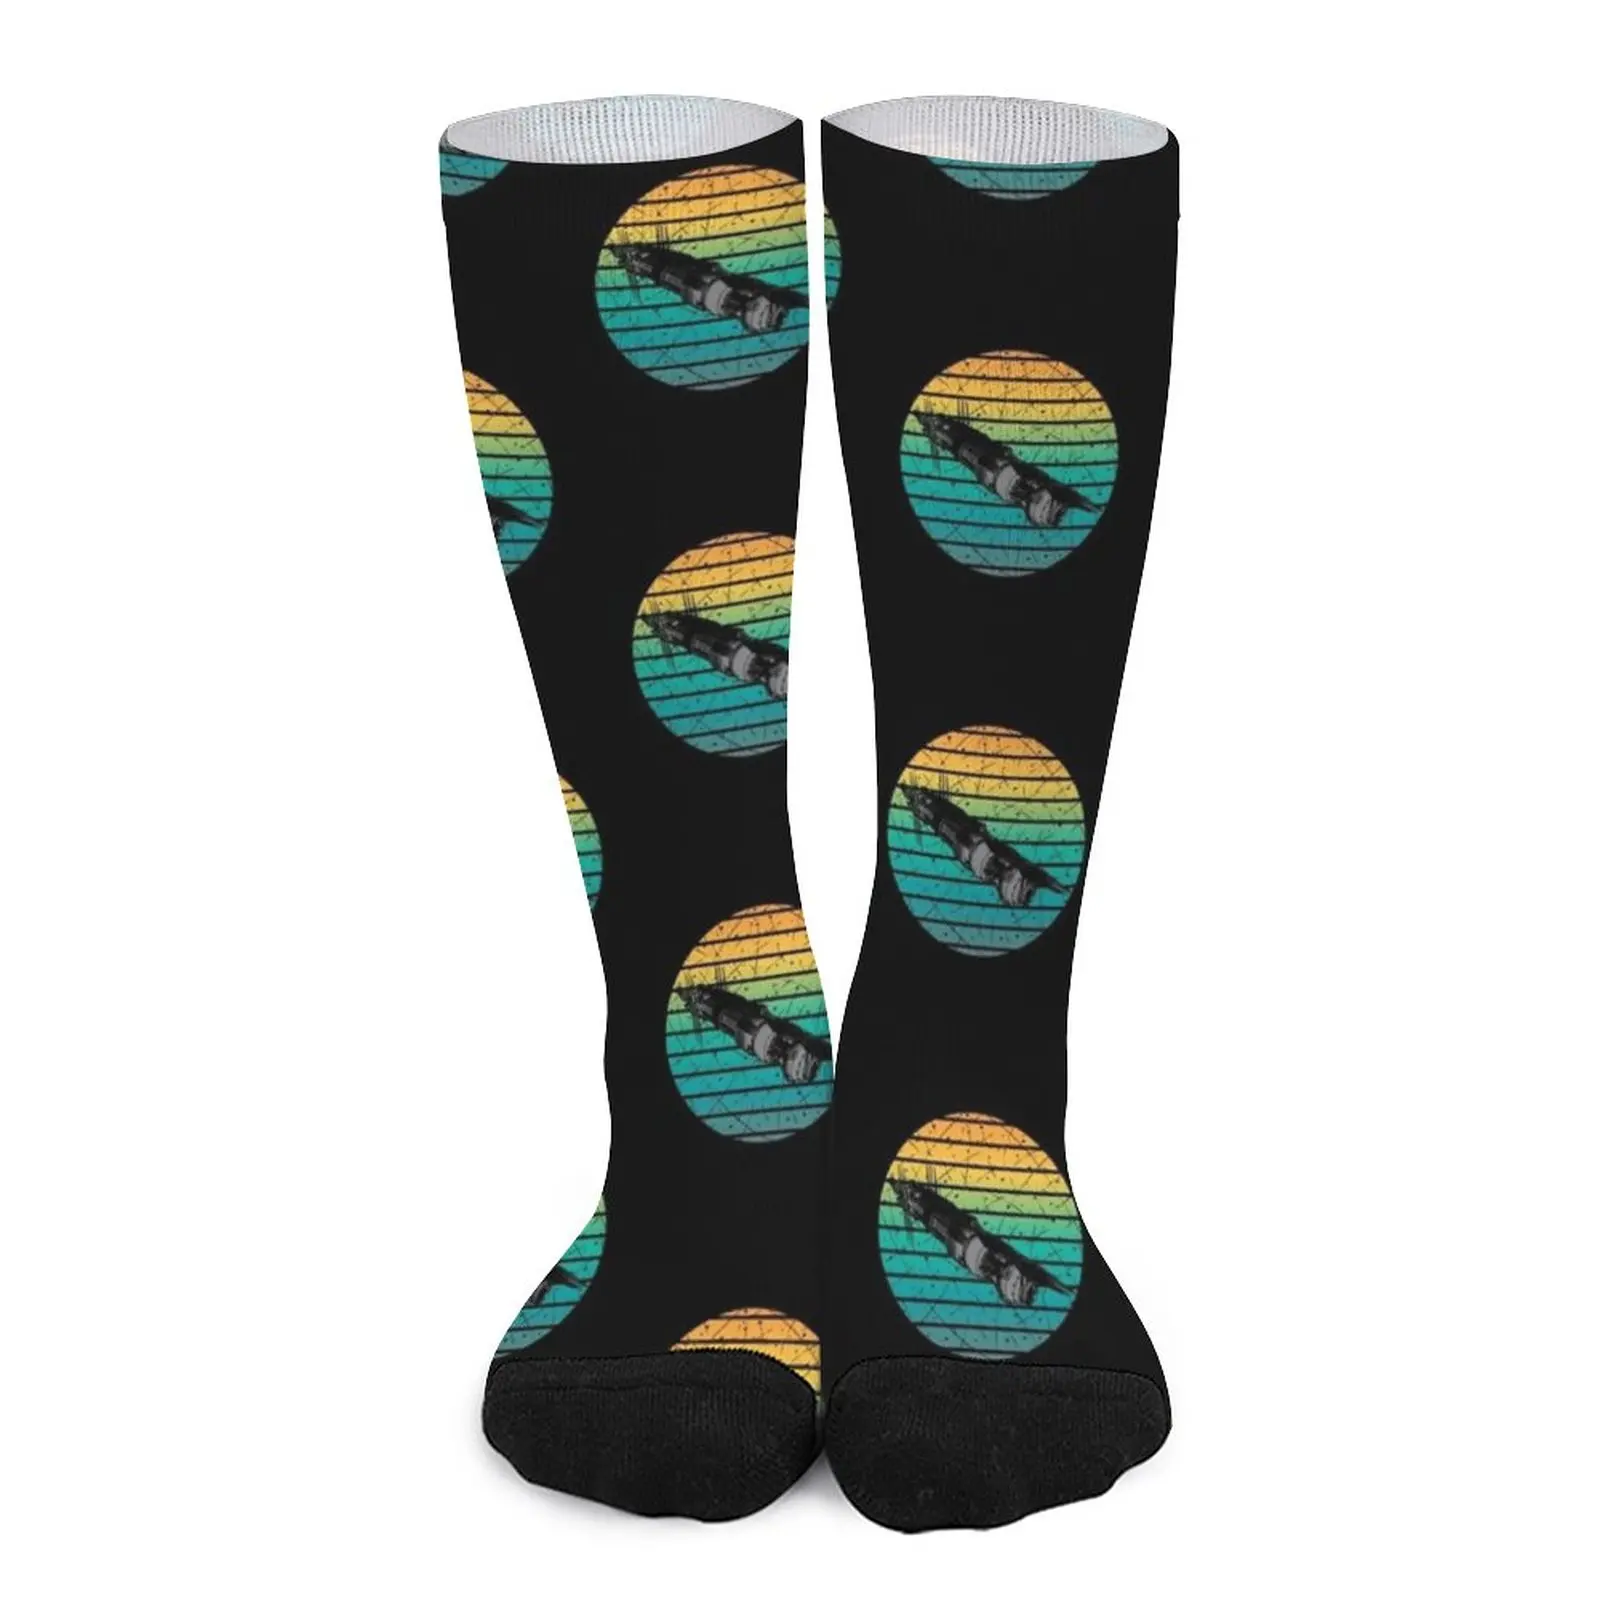 Space Station - Sunset - Black - Sci-Fi Socks Sock woman socks man funny socks for Women hockey